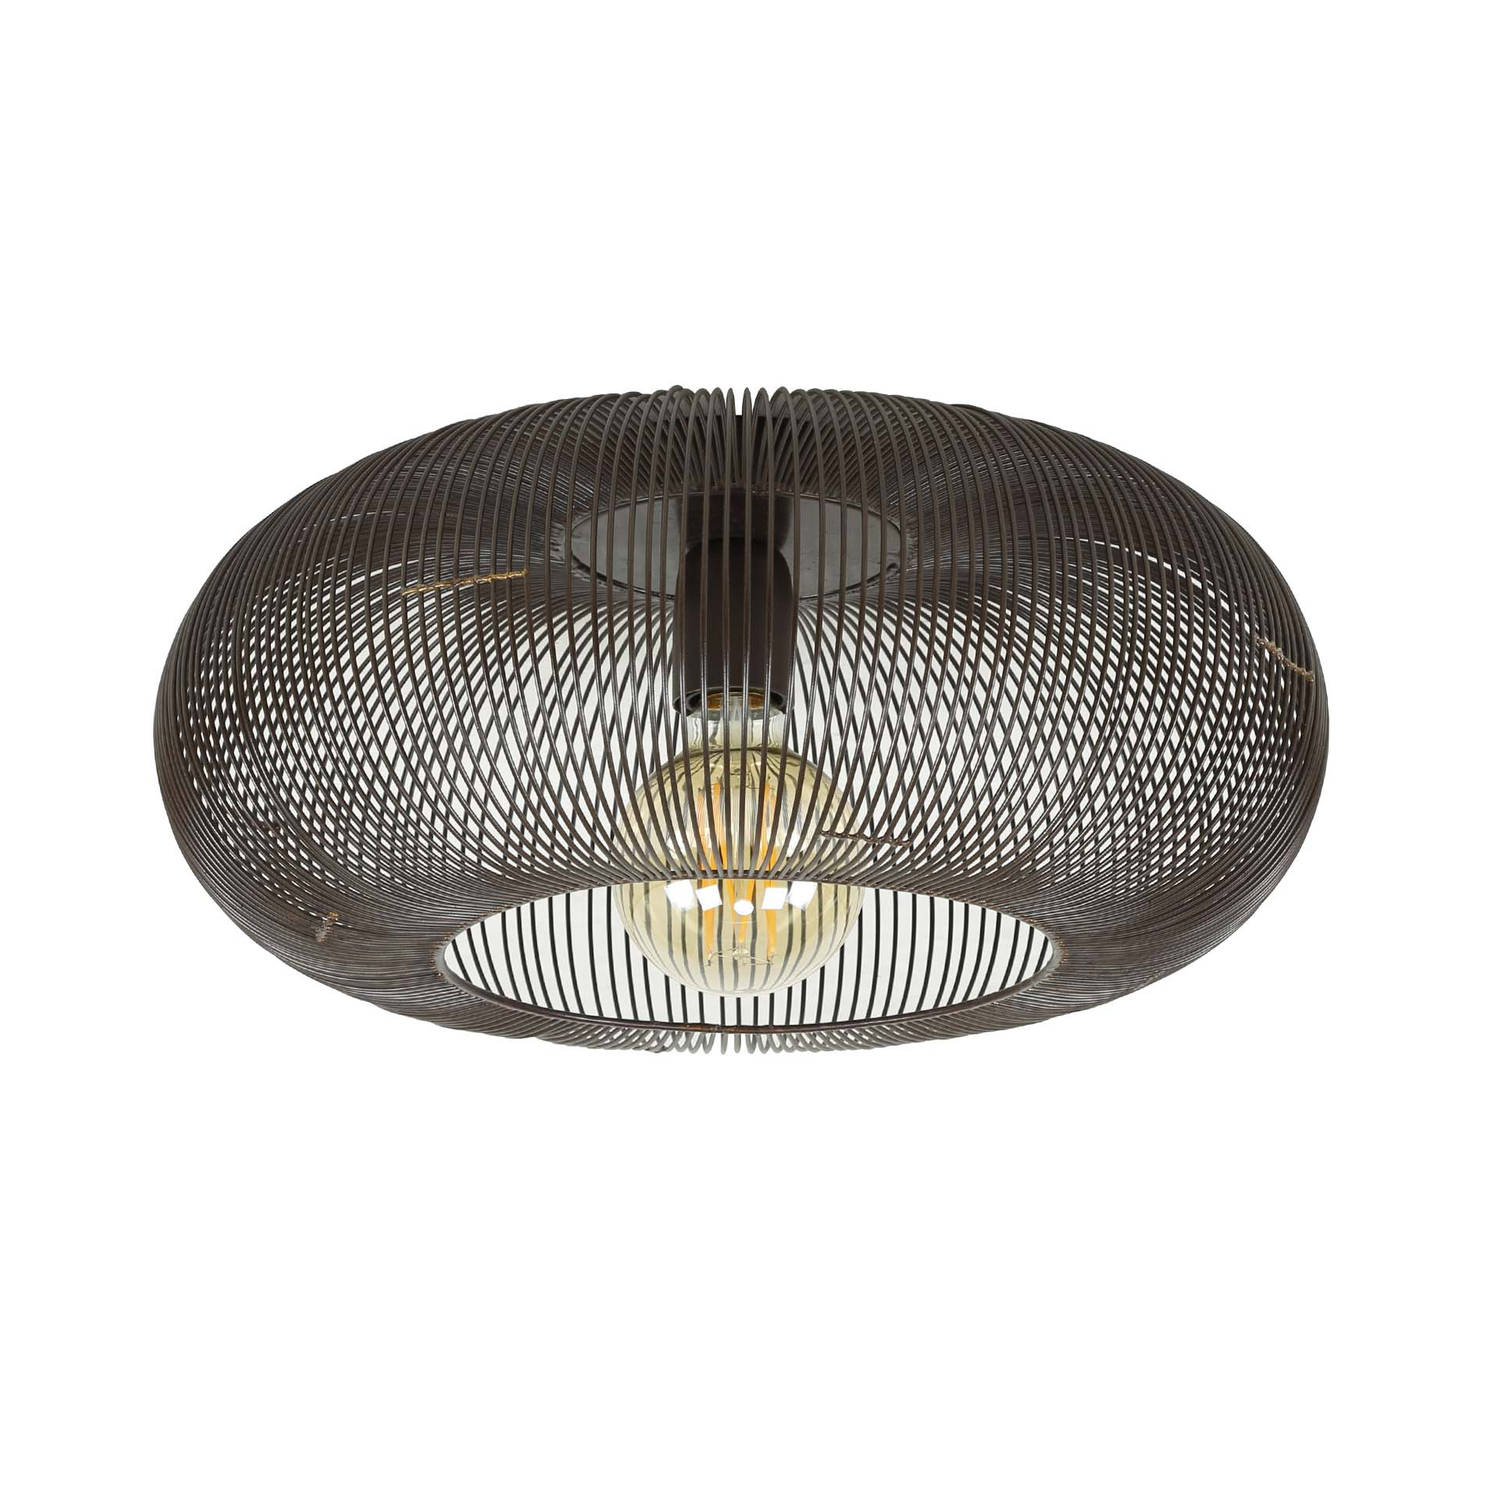 Giga Meubel Gm Plafondlamp Ø43cm - Zwart - Metaal - Lamp Copper Twist